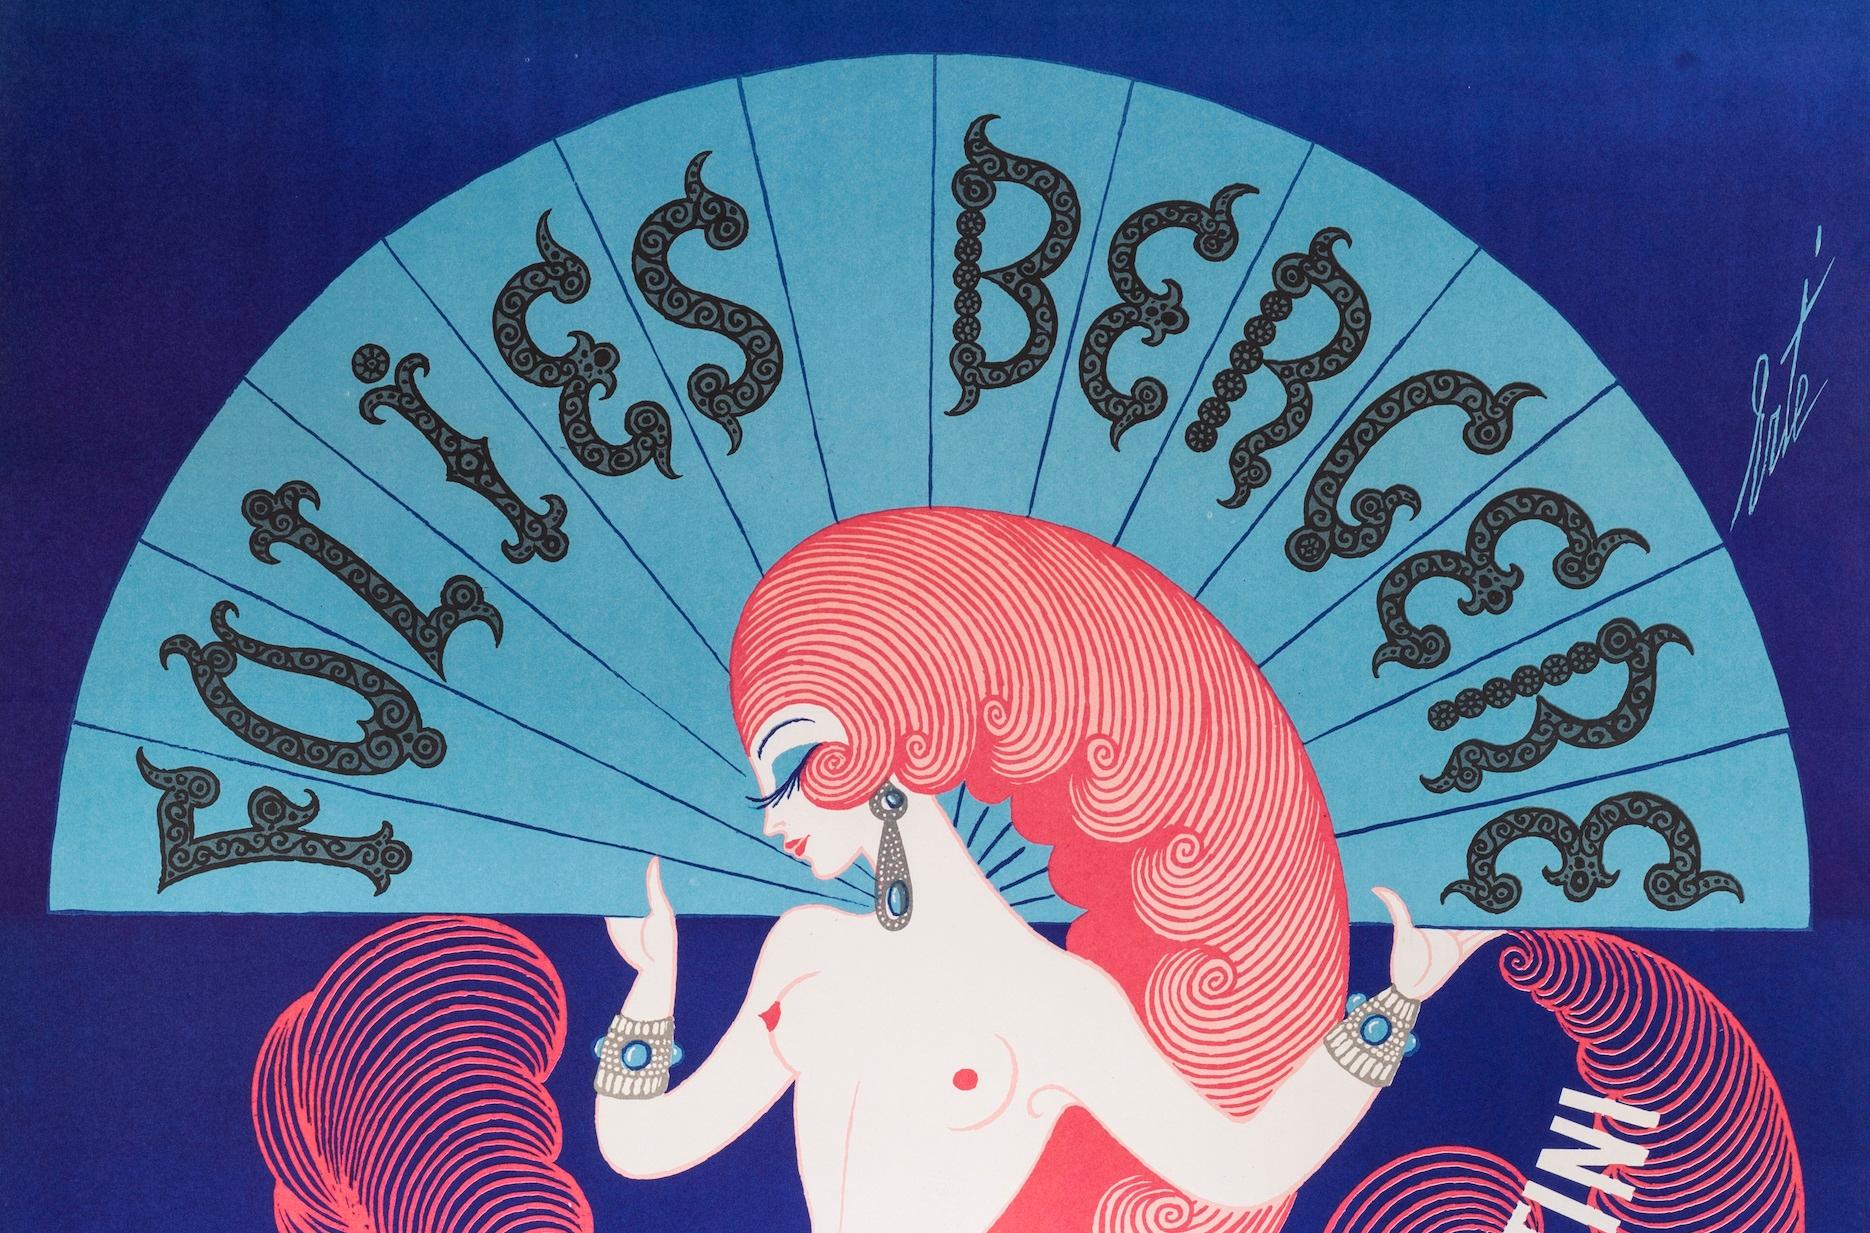 Original Vintage Poster-Erté-Folie Bergères.-Music Hall French Cancan, 1971

Additional Details:
Materials and Techniques: Colour lithograph on paper
Color: Blue, Pink, White
Features: Signed
Style: Vintage
Unit of Sale: Single-Piece